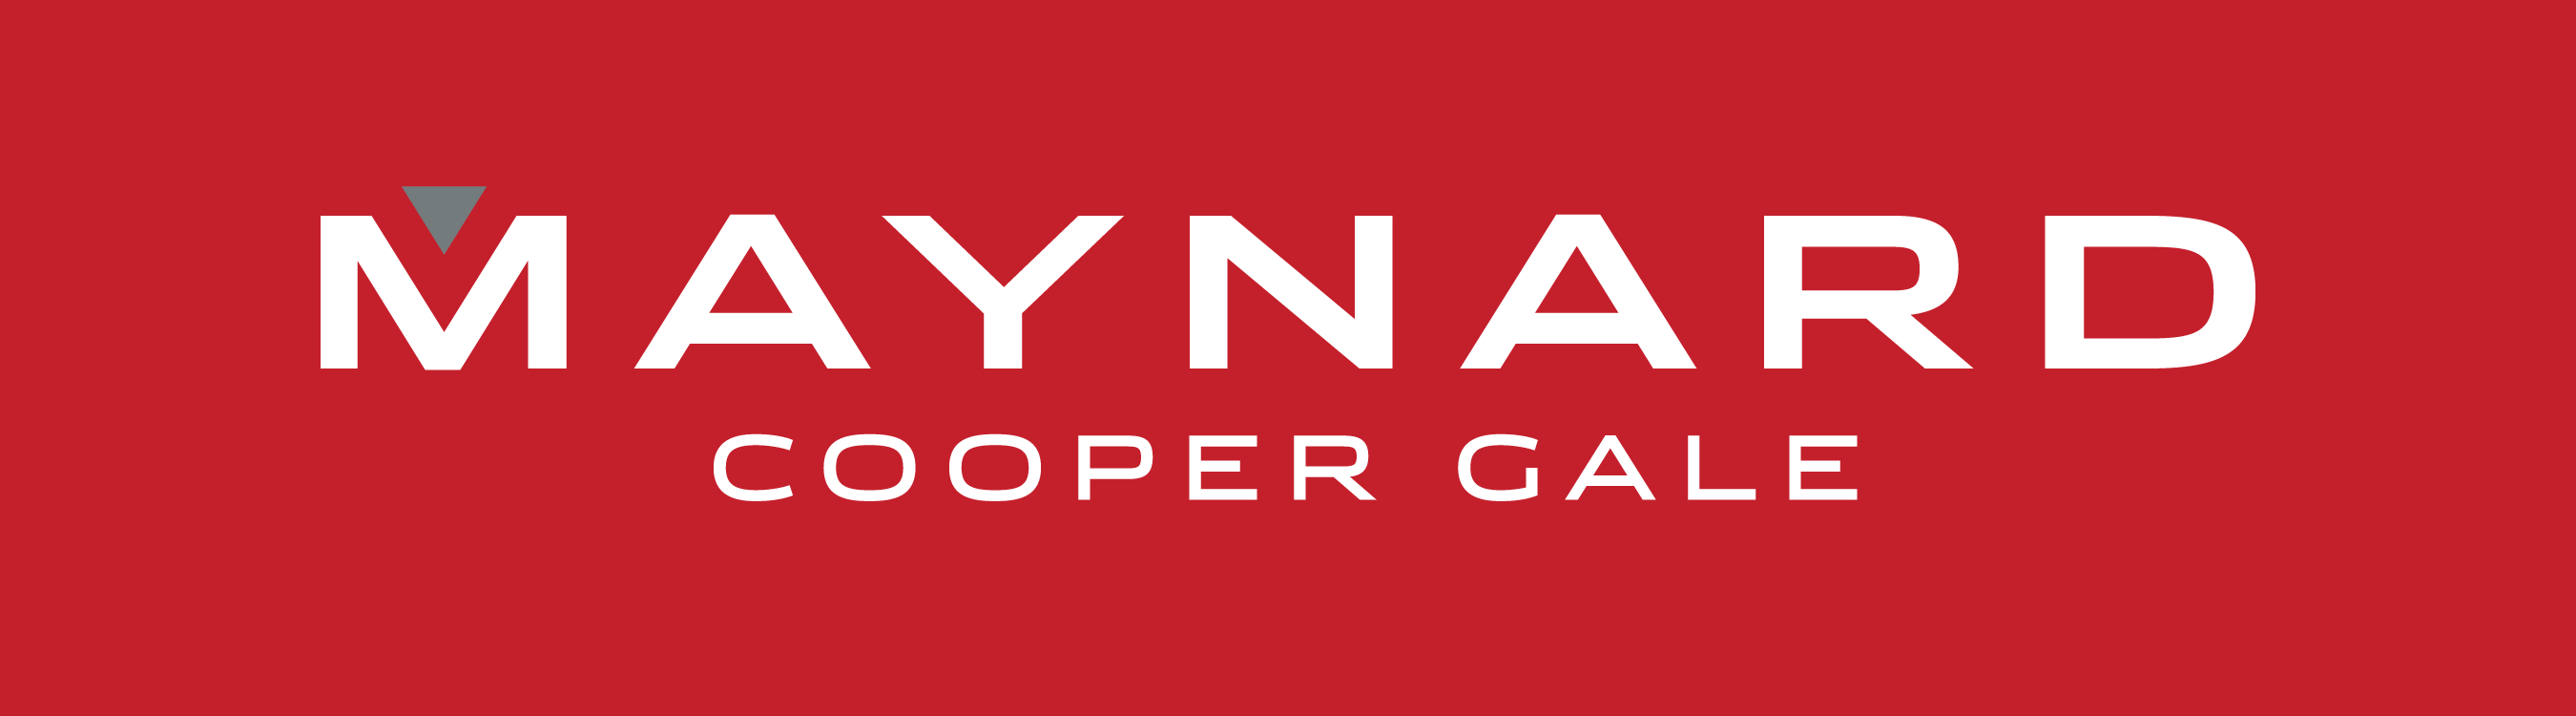 Maynard Cooper logo